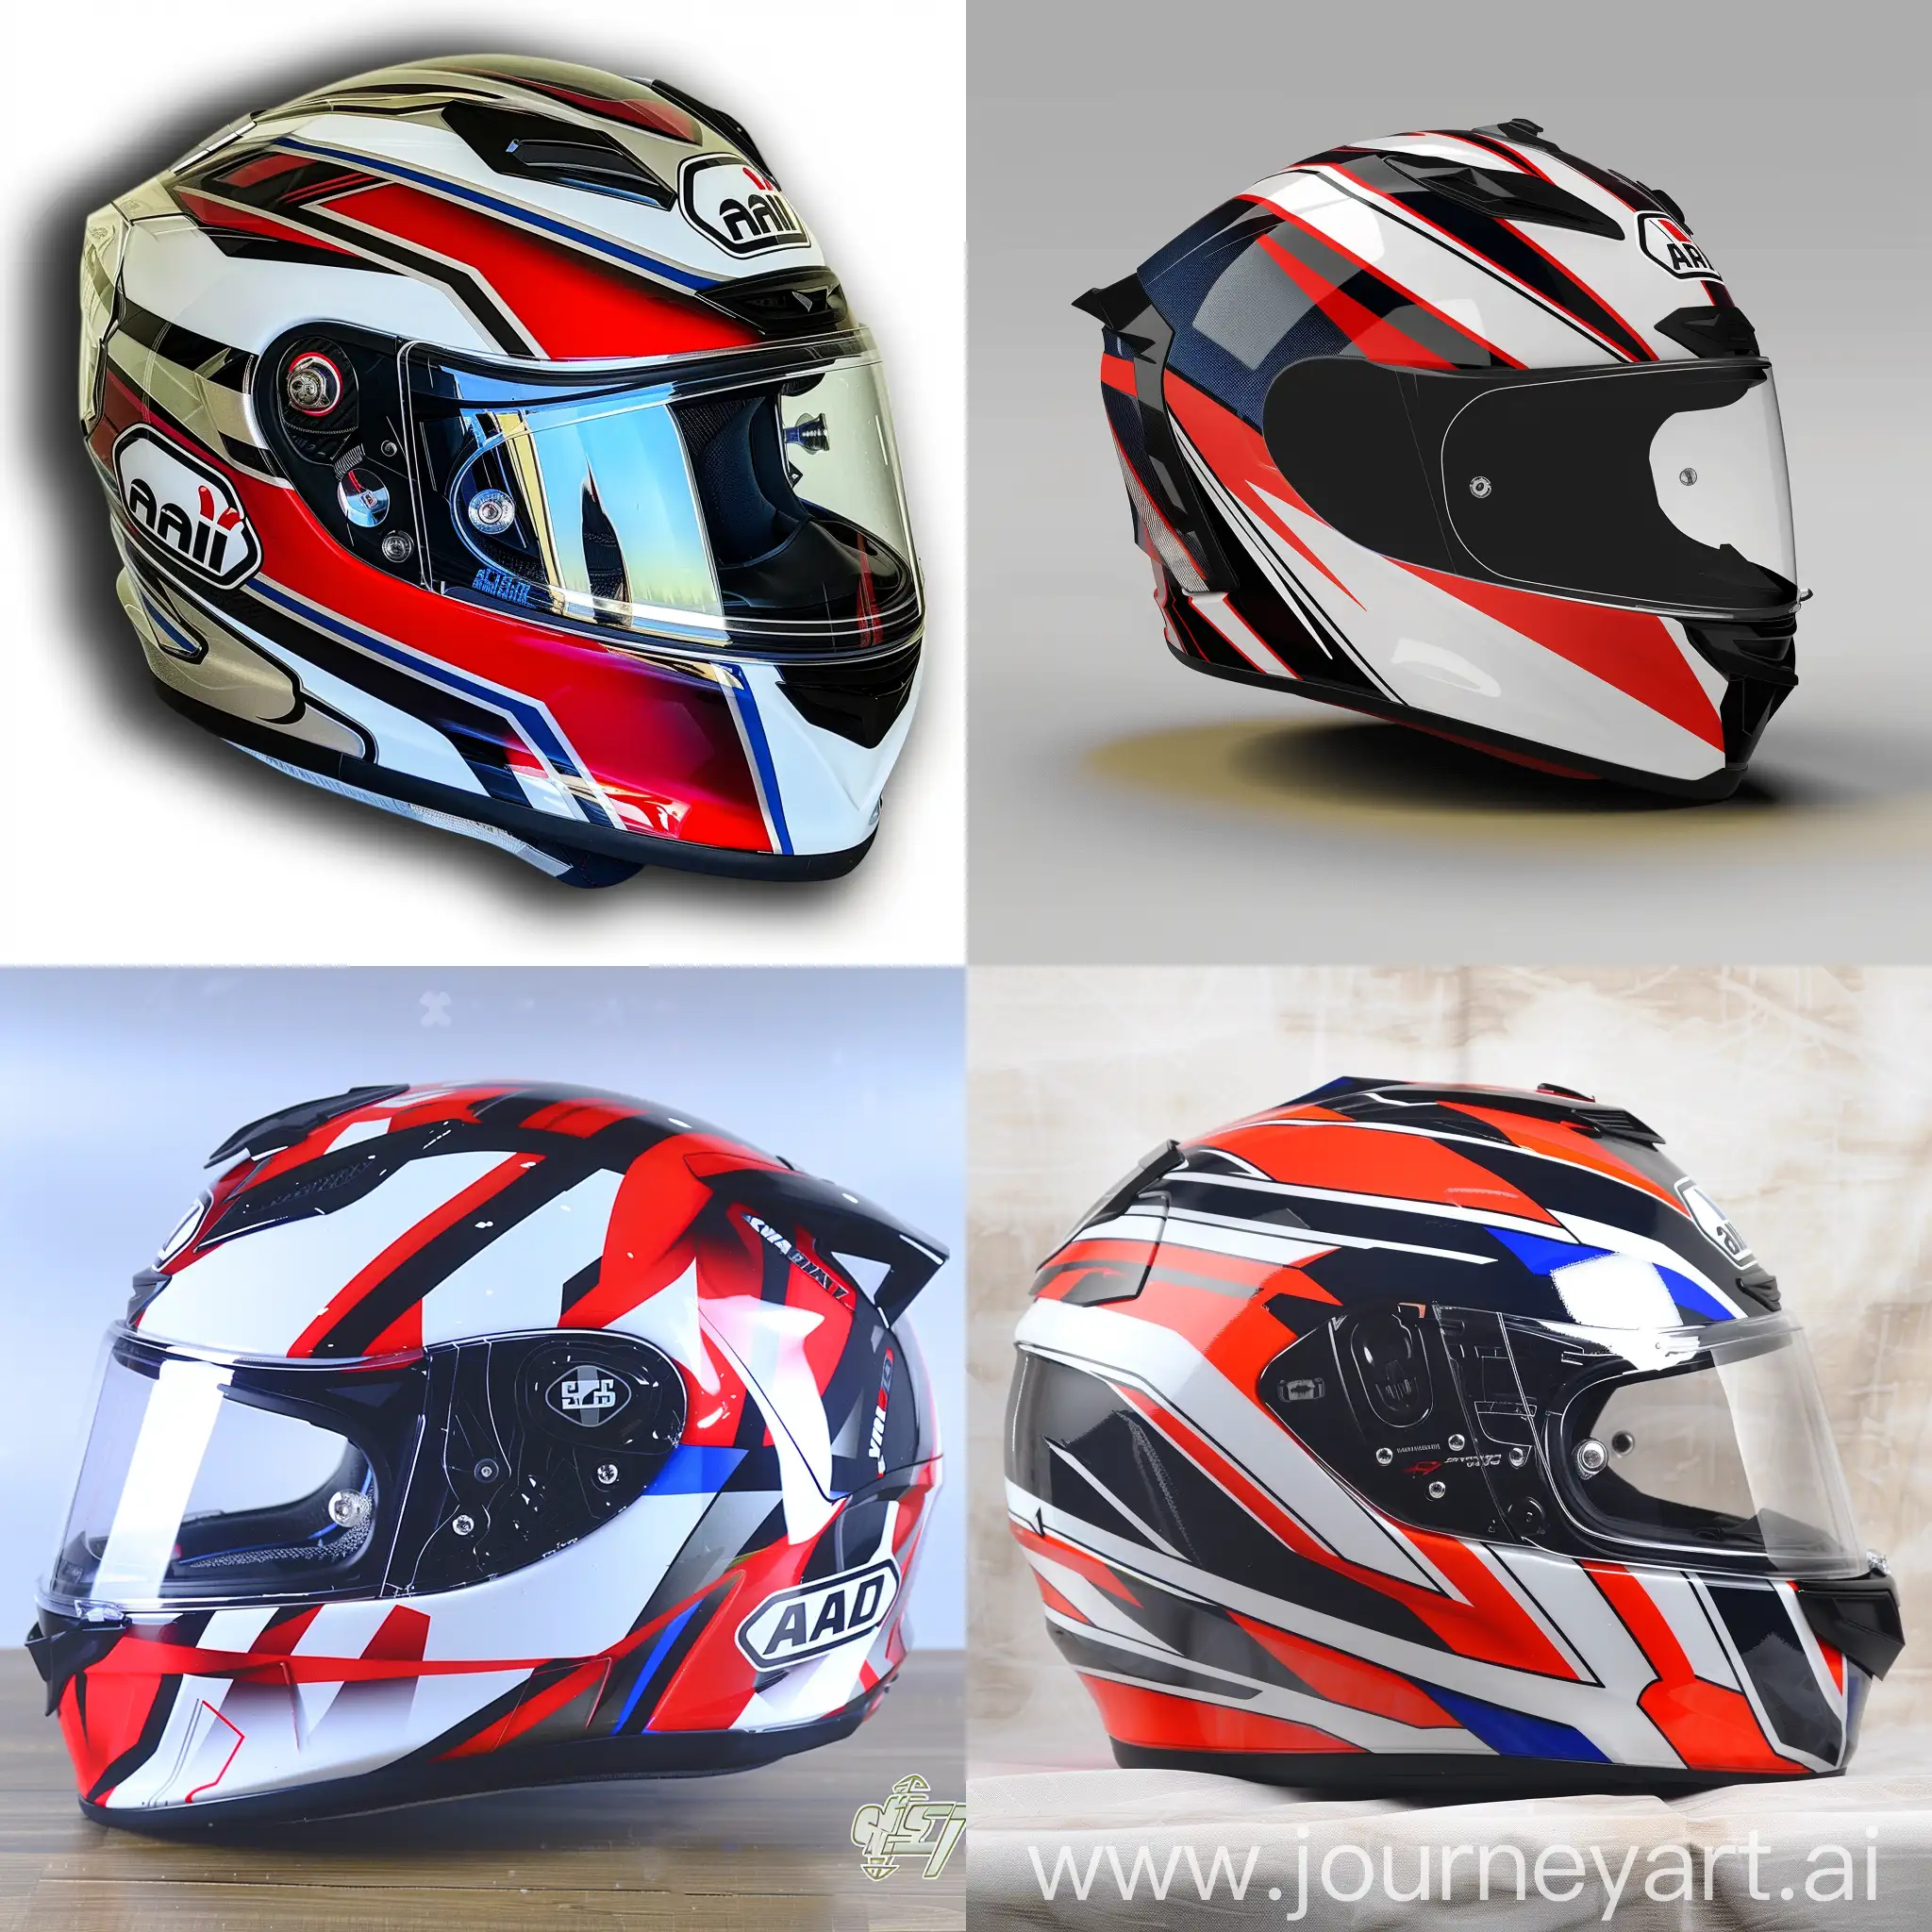 Sleek-FullFace-ARAI-Motorcycle-Helmet-with-Red-White-Black-and-Blue-Design